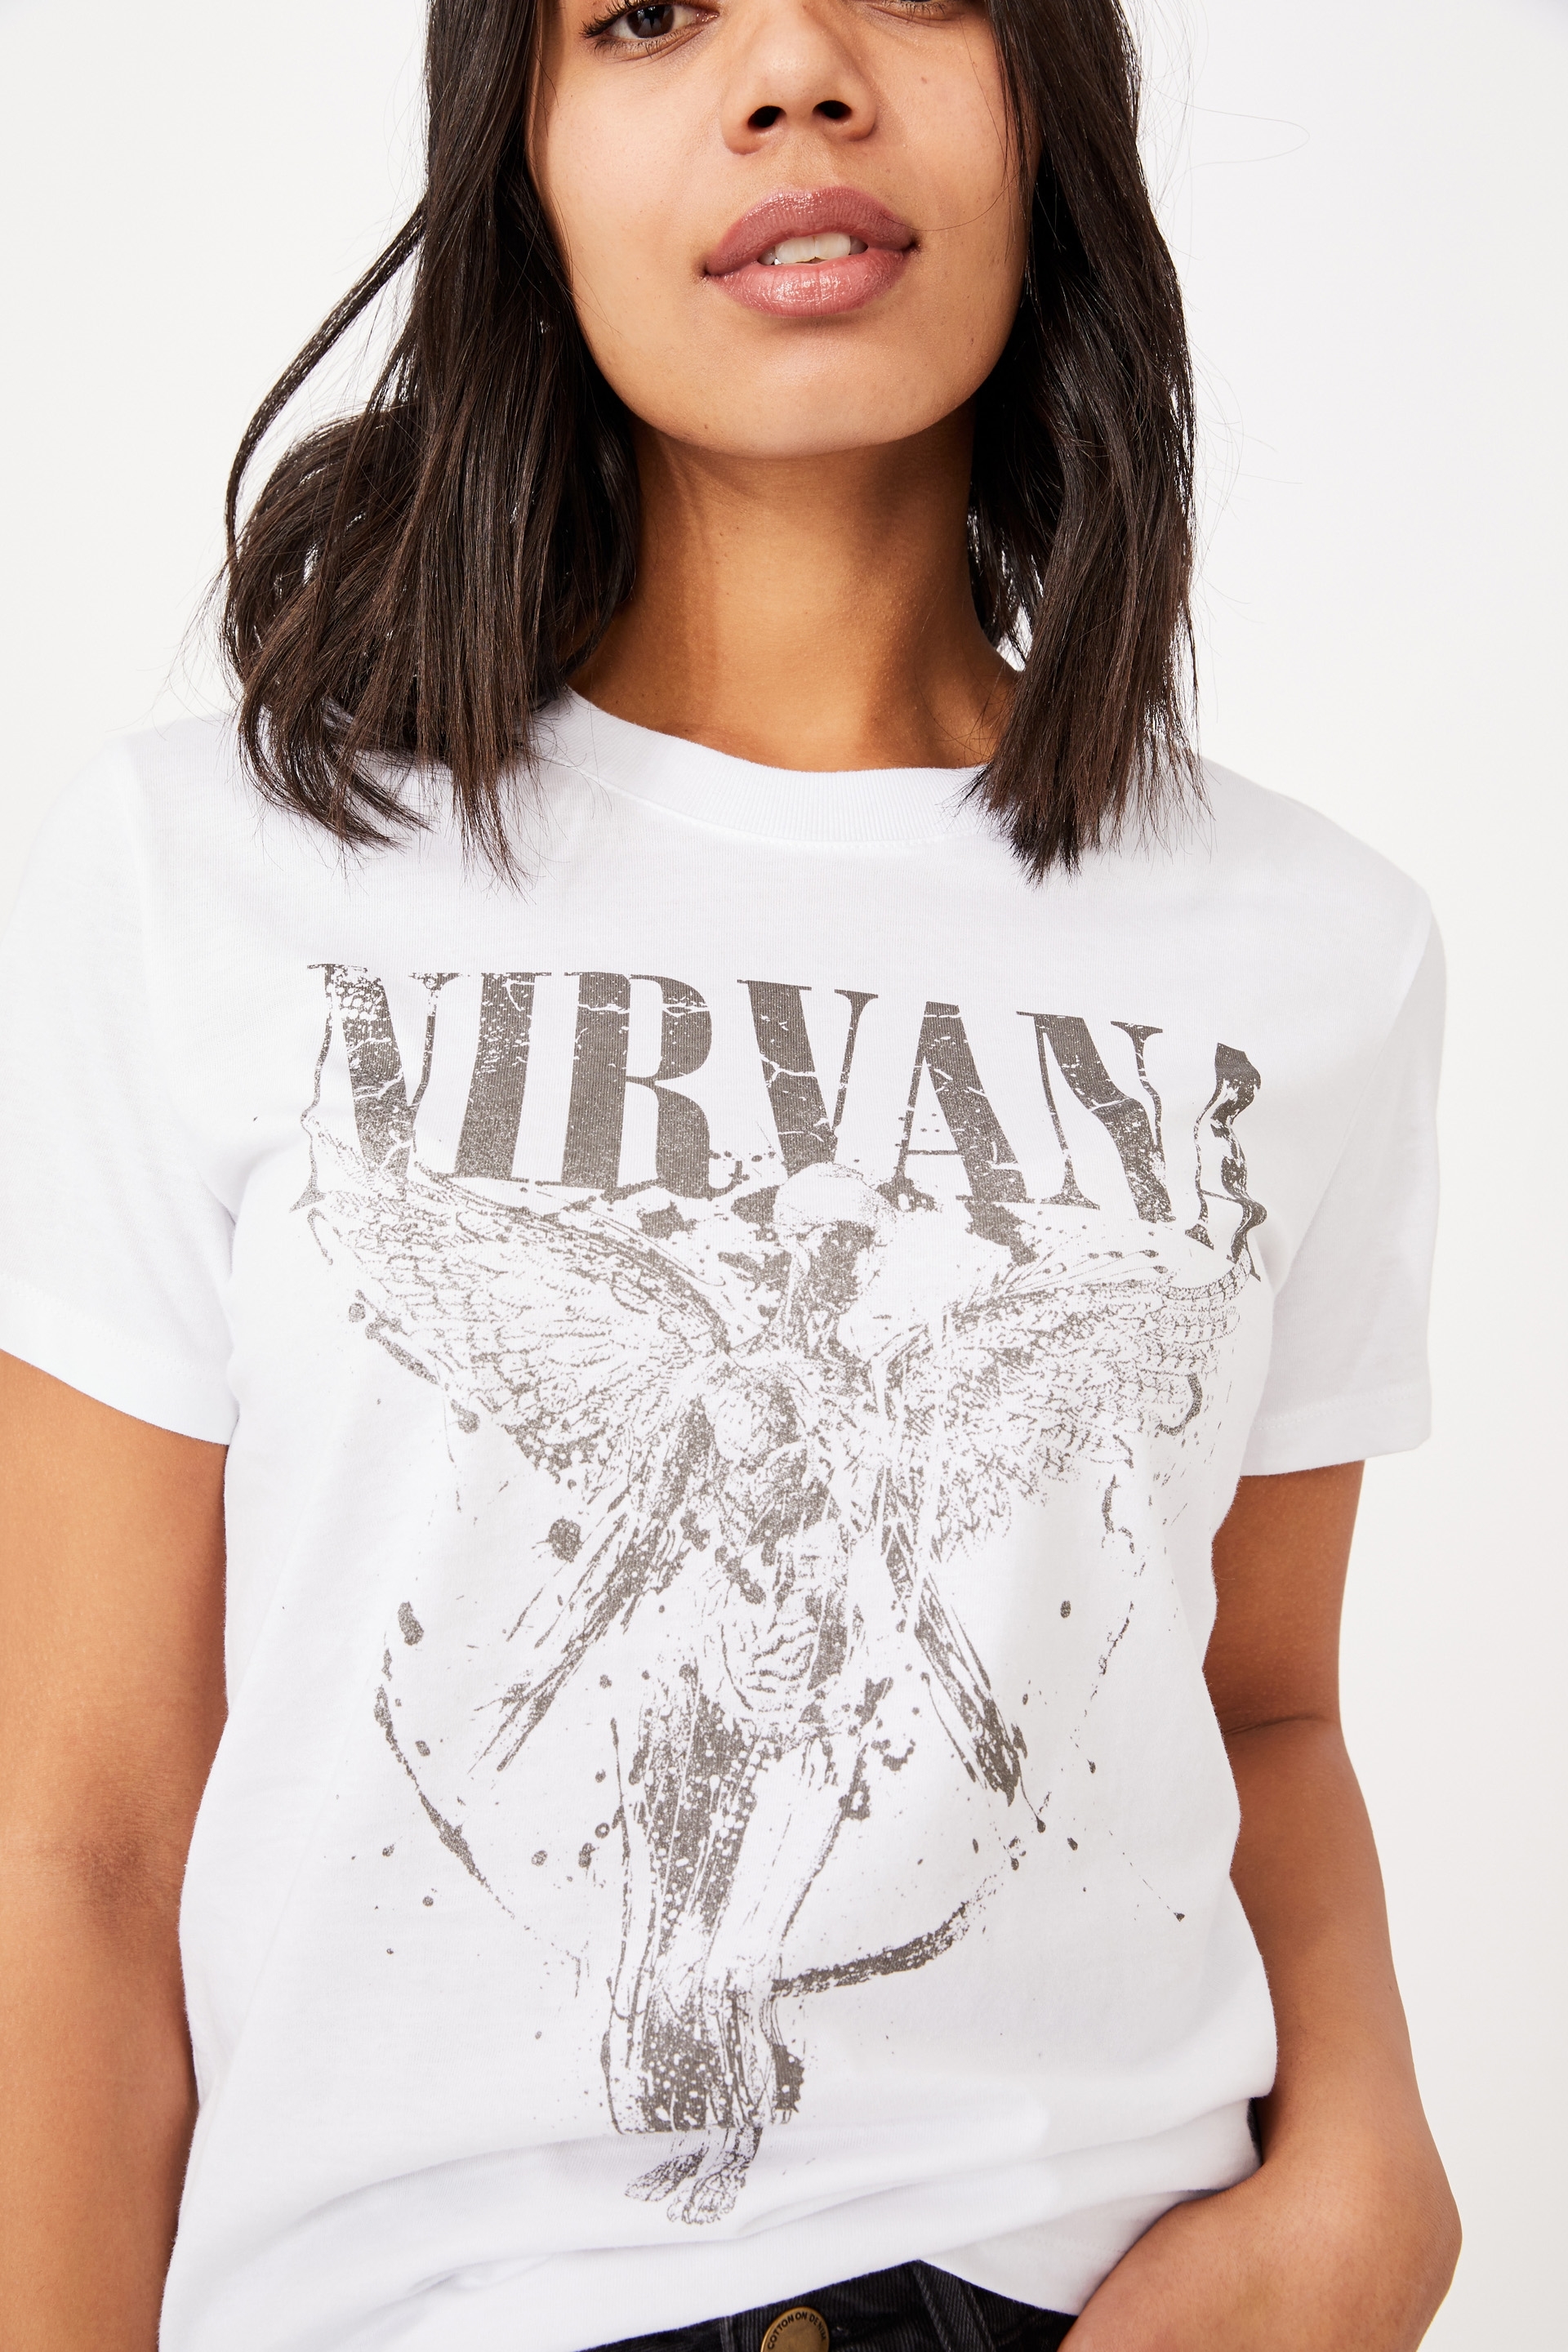 nirvana shirt girl doesn't know